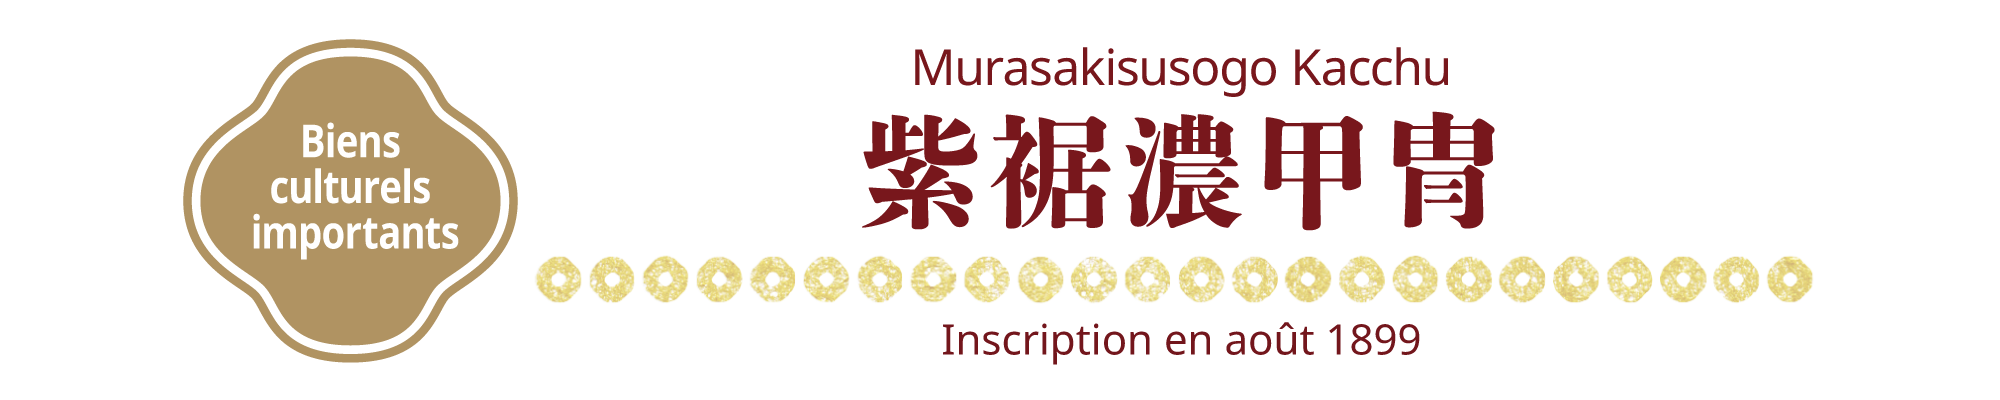 [Biens culturels importants]Murasakisusogo Kacchu, Inscription en août 1899